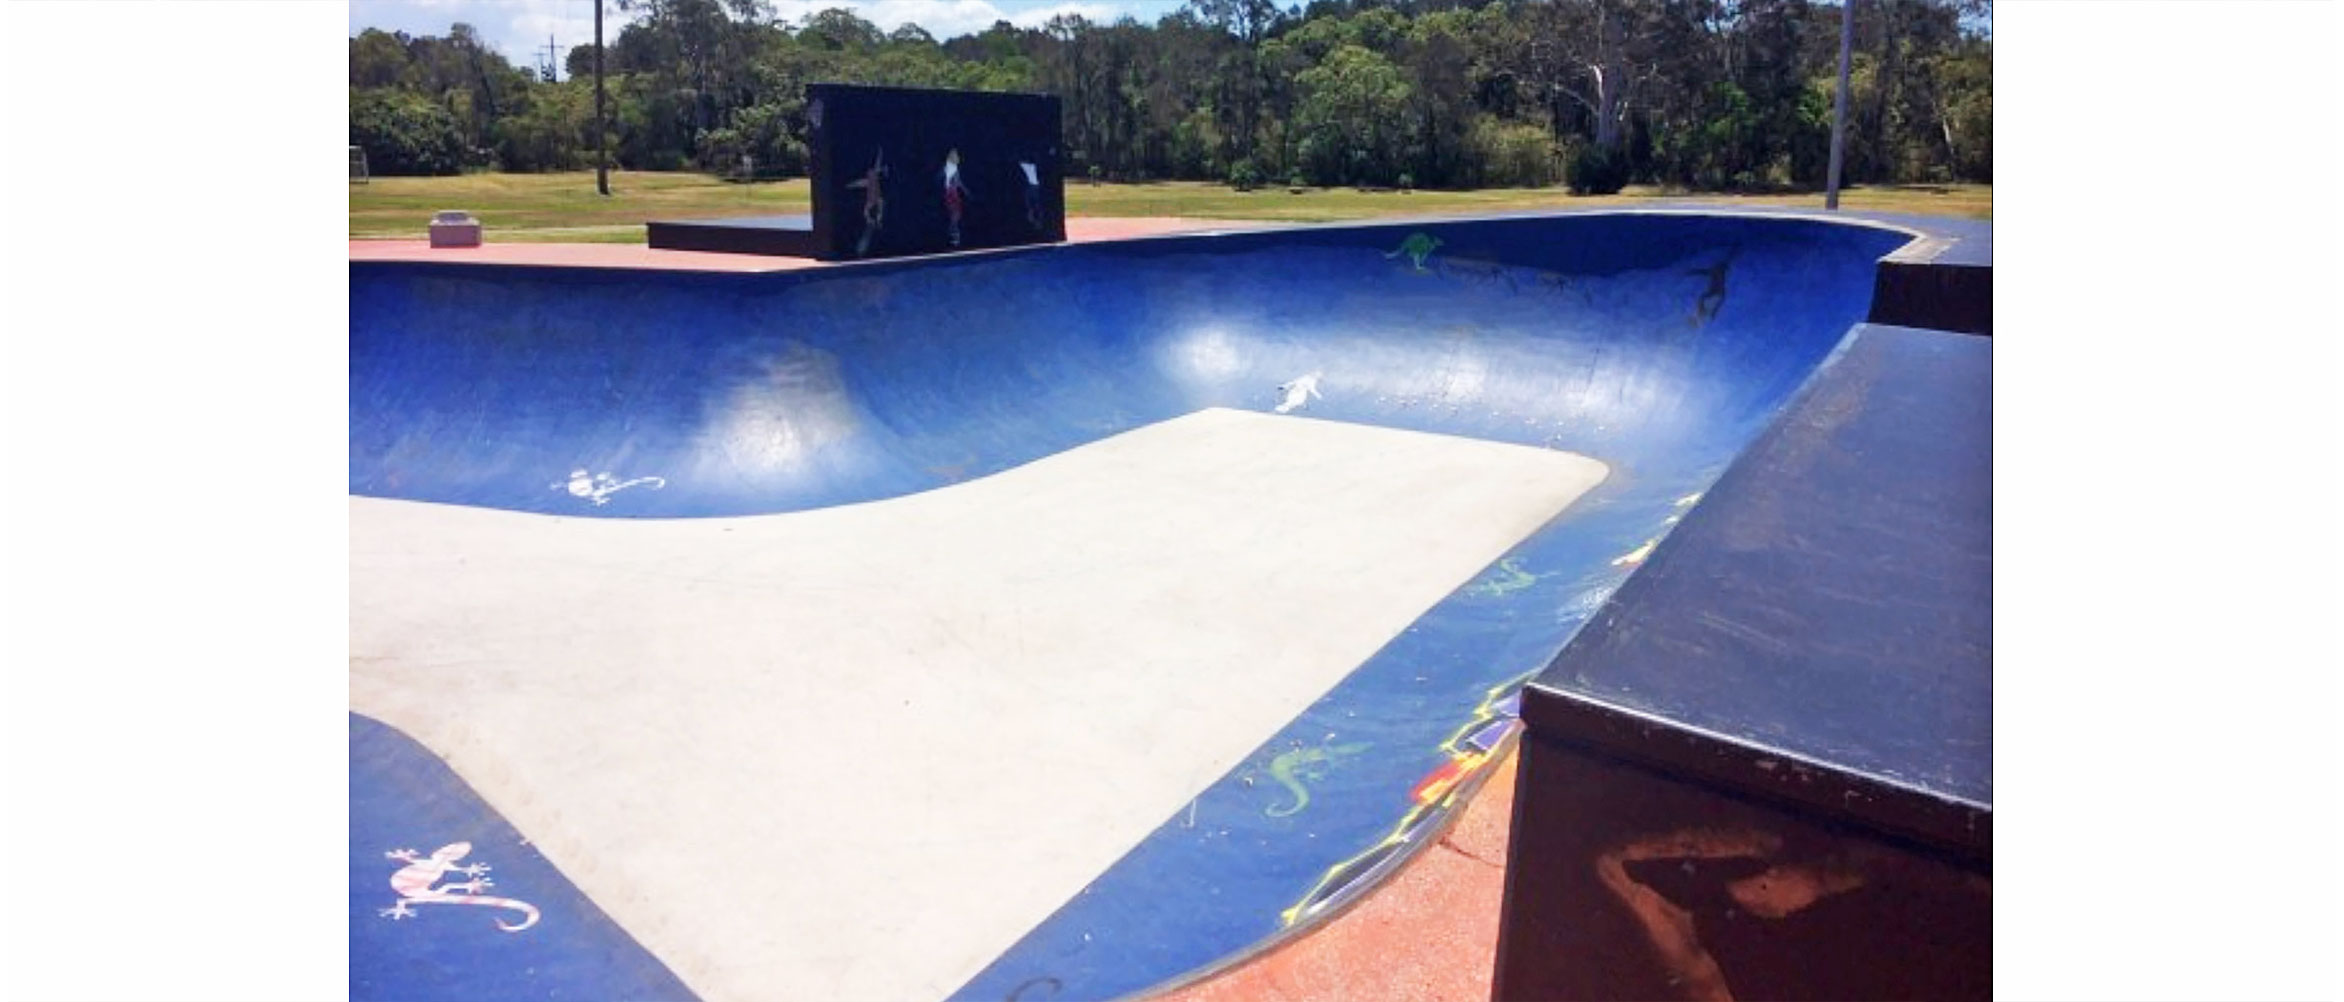 Capalaba skate park bowl section, Concrete Skateparks build